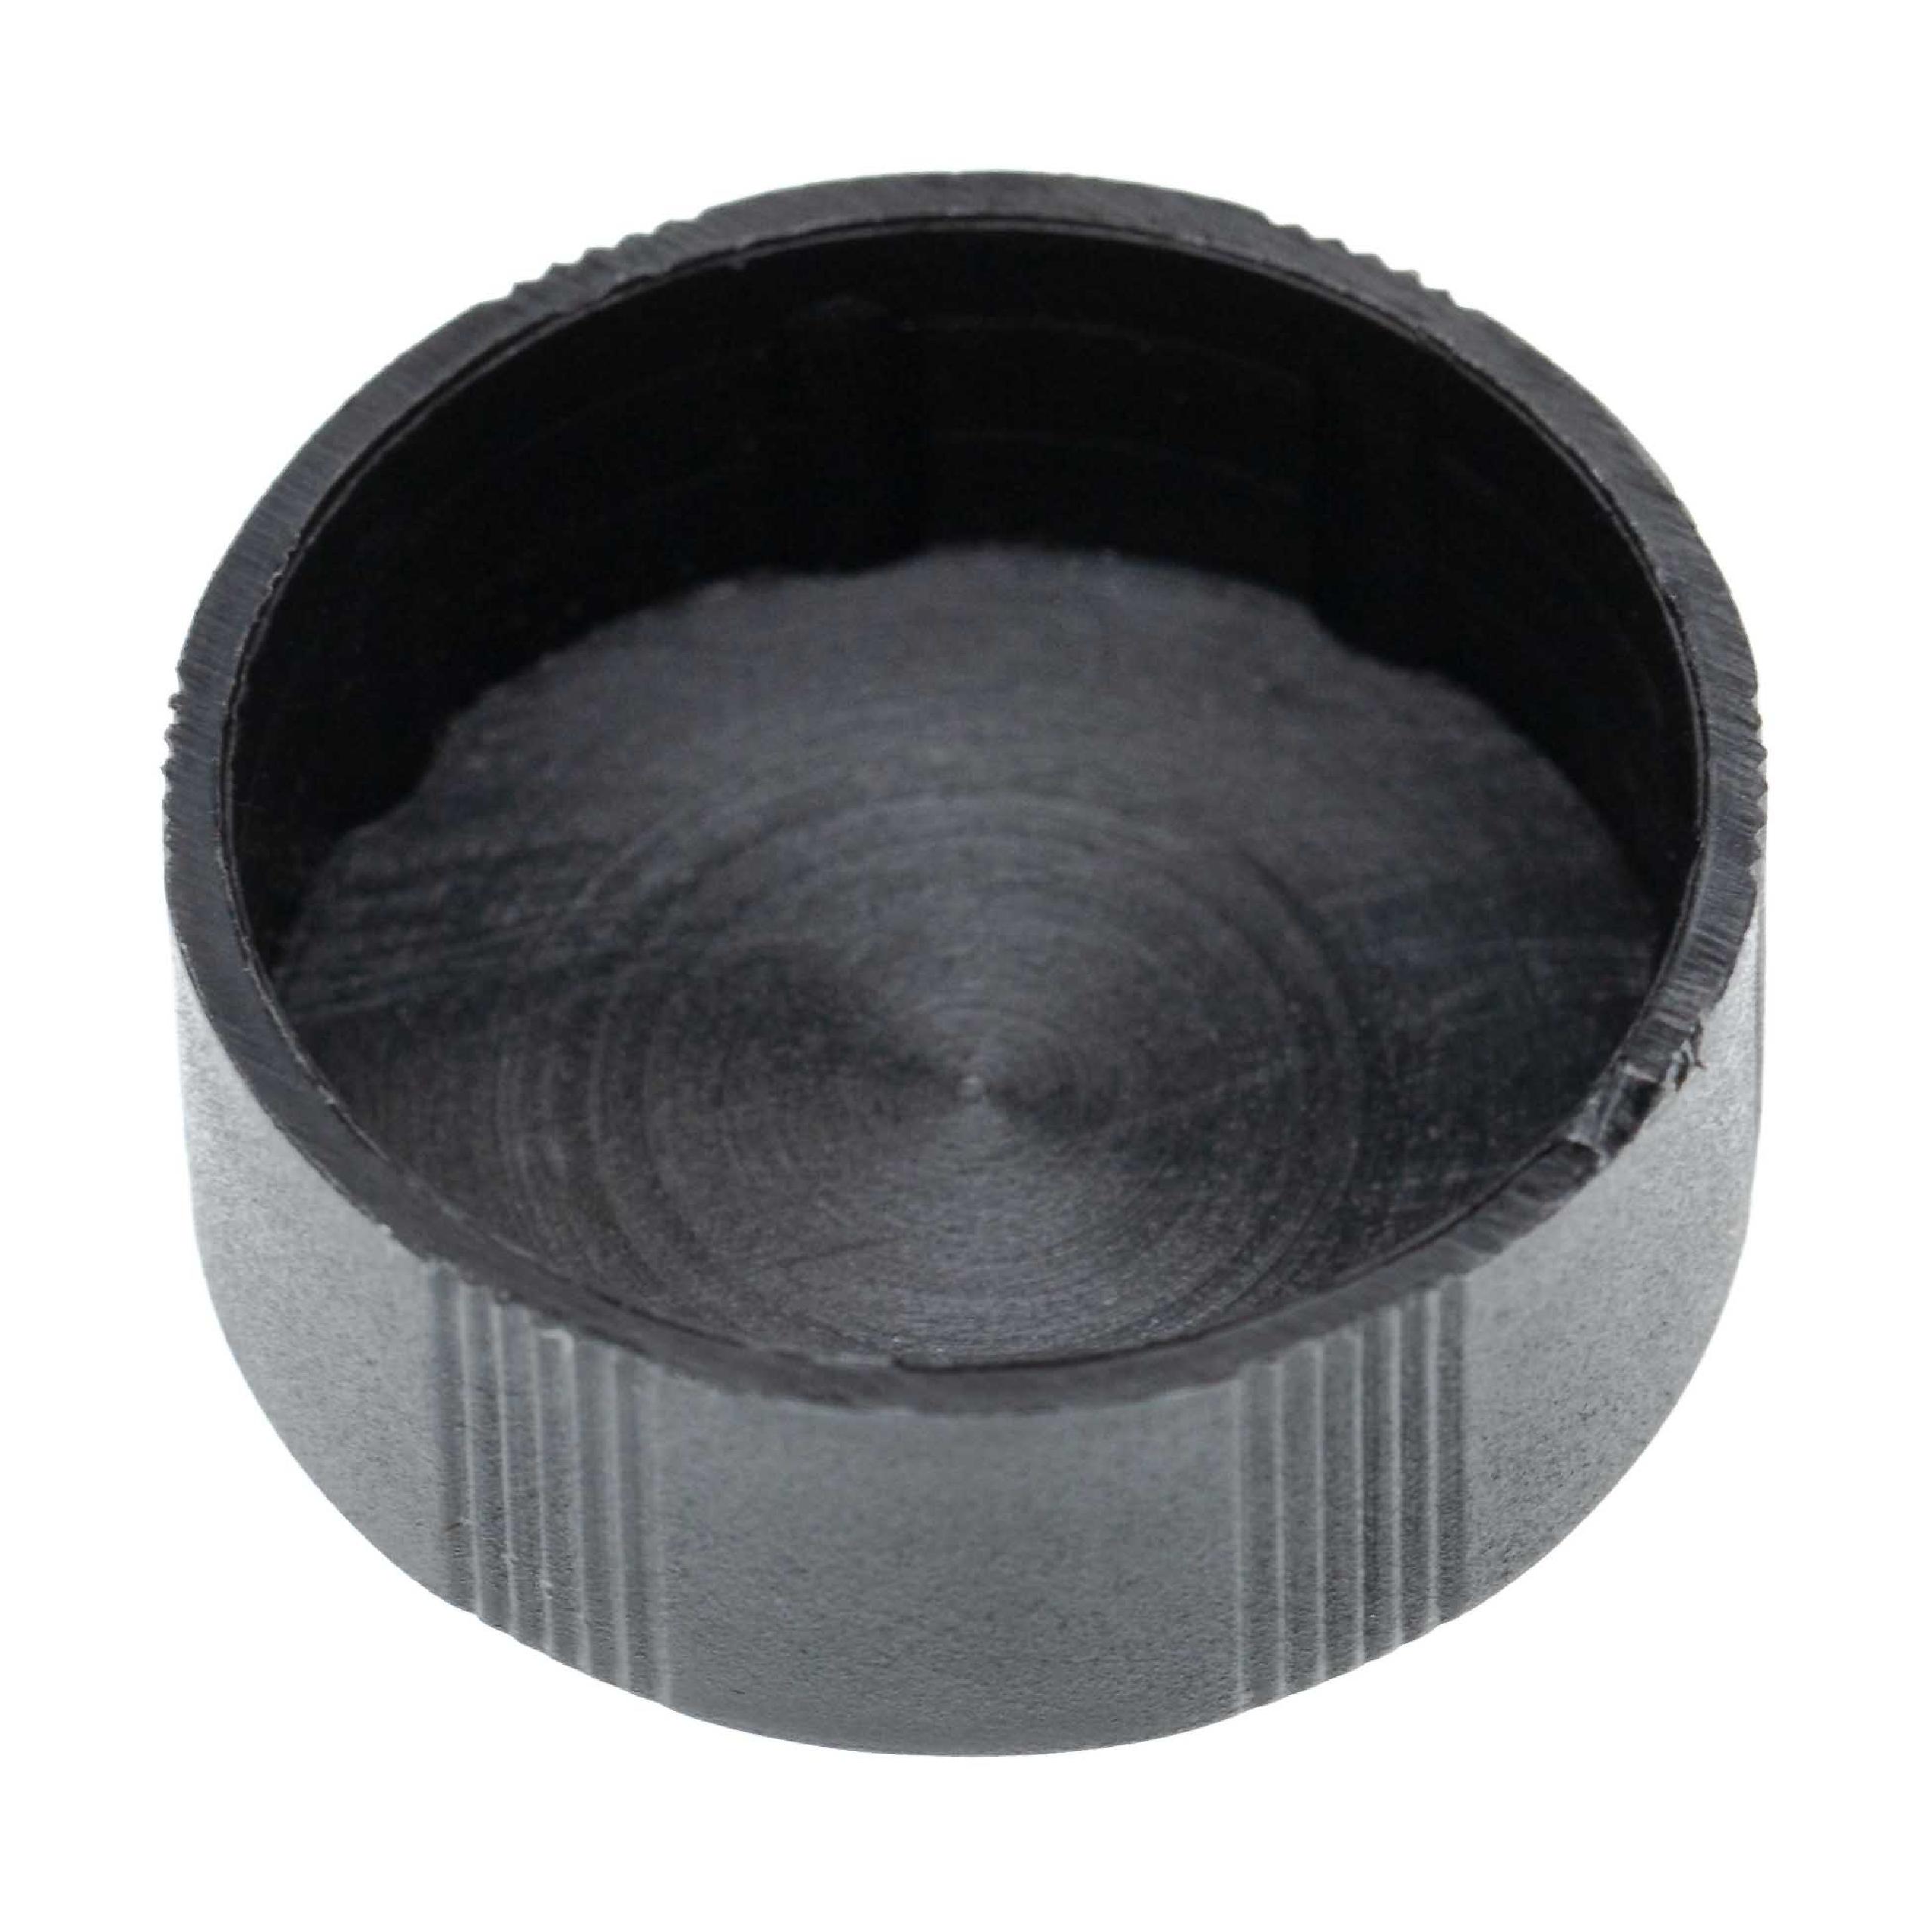 Lens Cap suitable for Binocular Lens with 30 mm Diameter - Black, Detachable